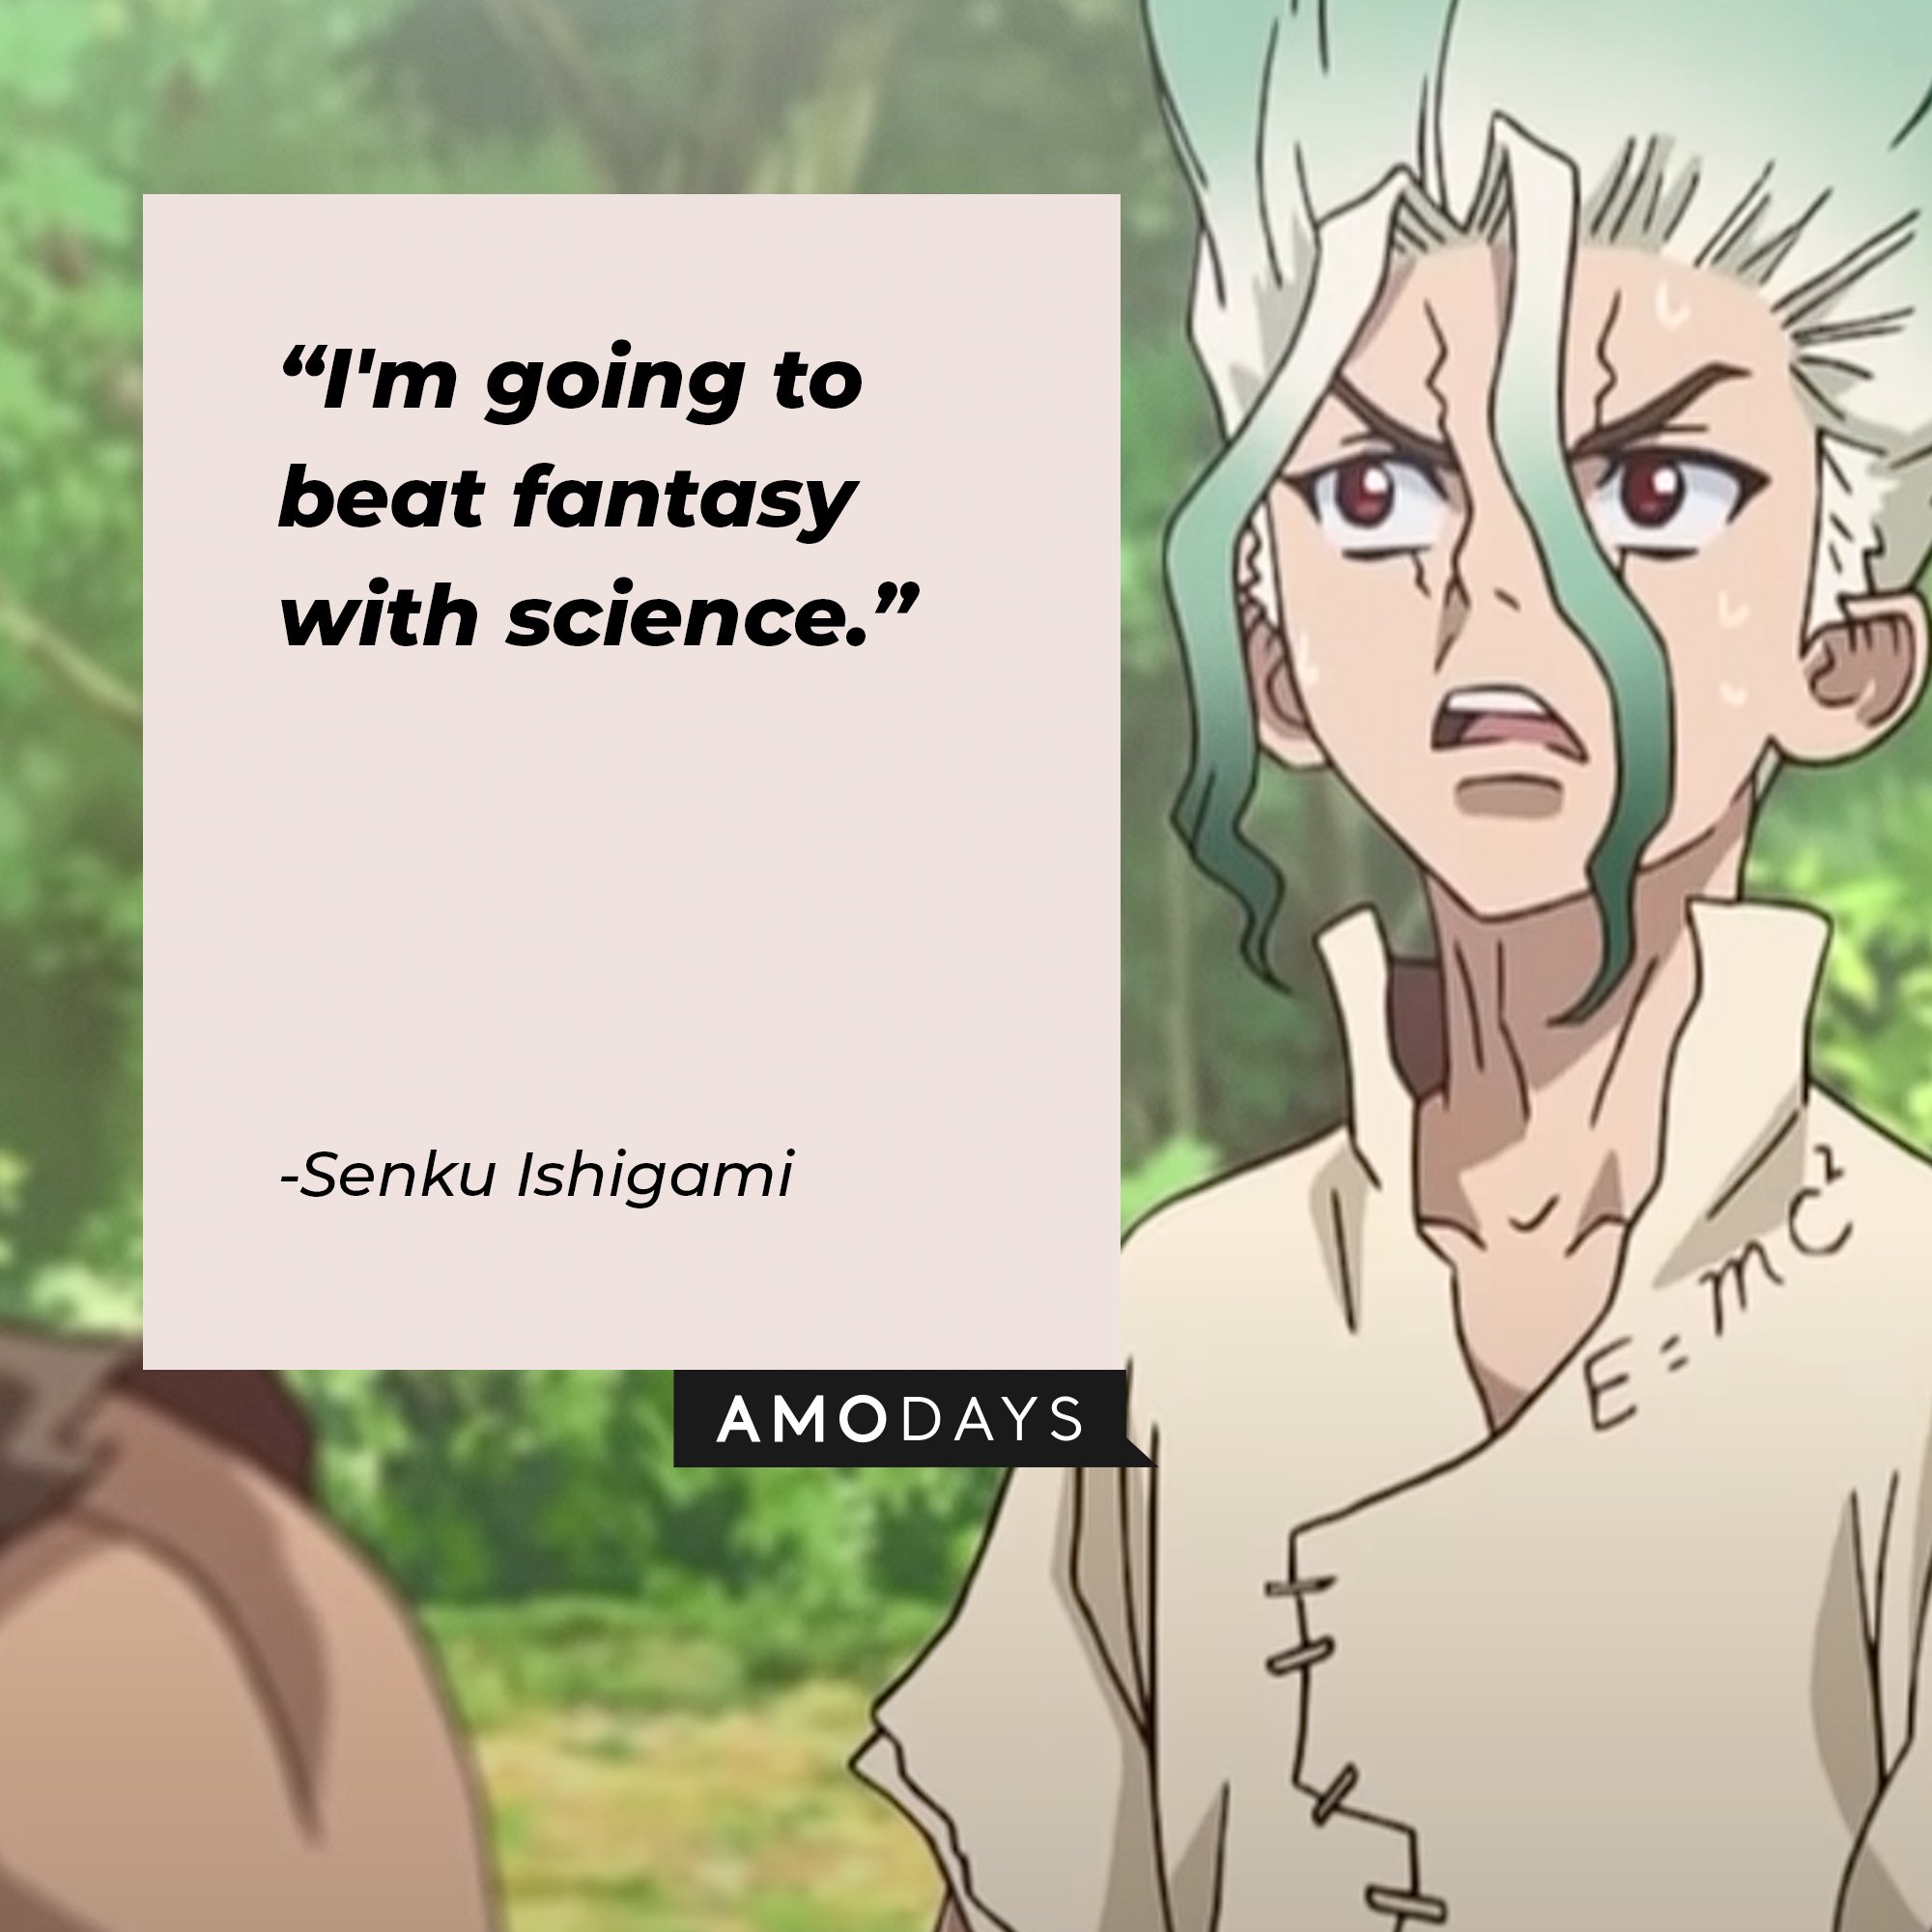 Senku Ishigami's quote: “I'm going to beat fantasy with science.” | Image: AmoDays